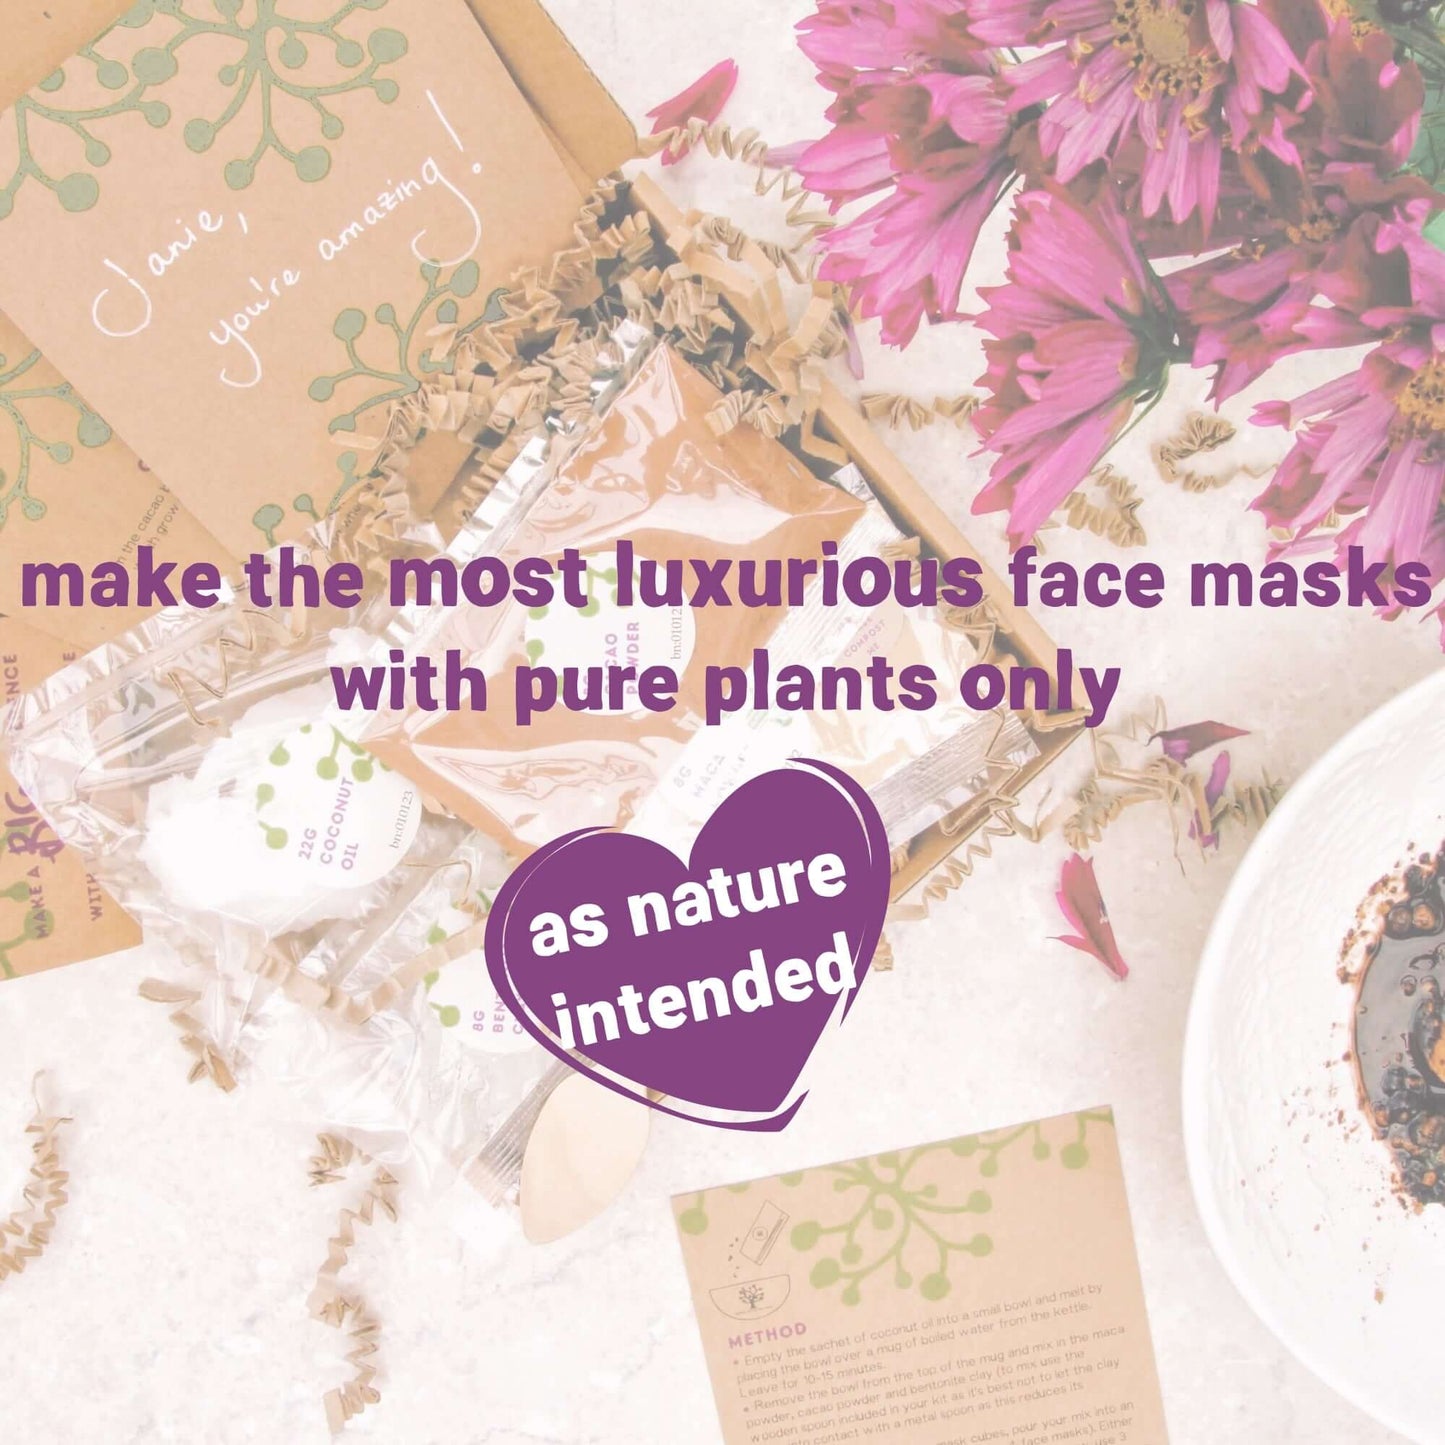 organic face mask kit inside bride to be pamper gift